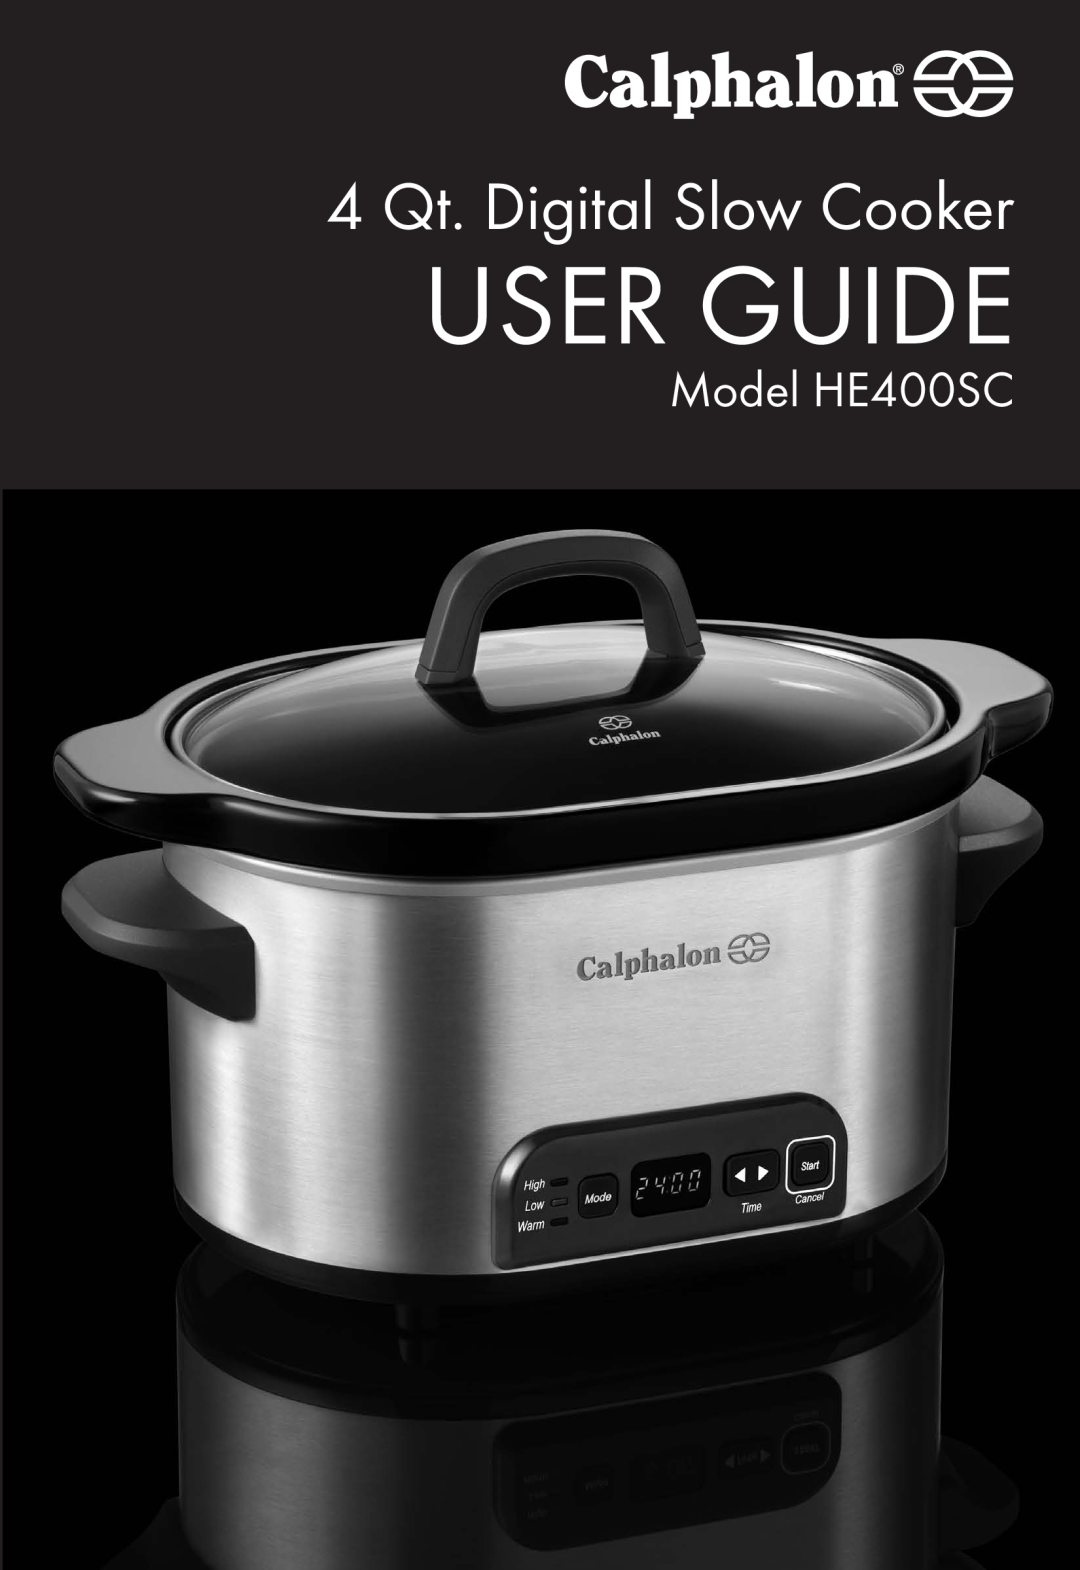 Calphalon manual User Guide, 4 Qt. Digital Slow Cooker, Model HE400SC 